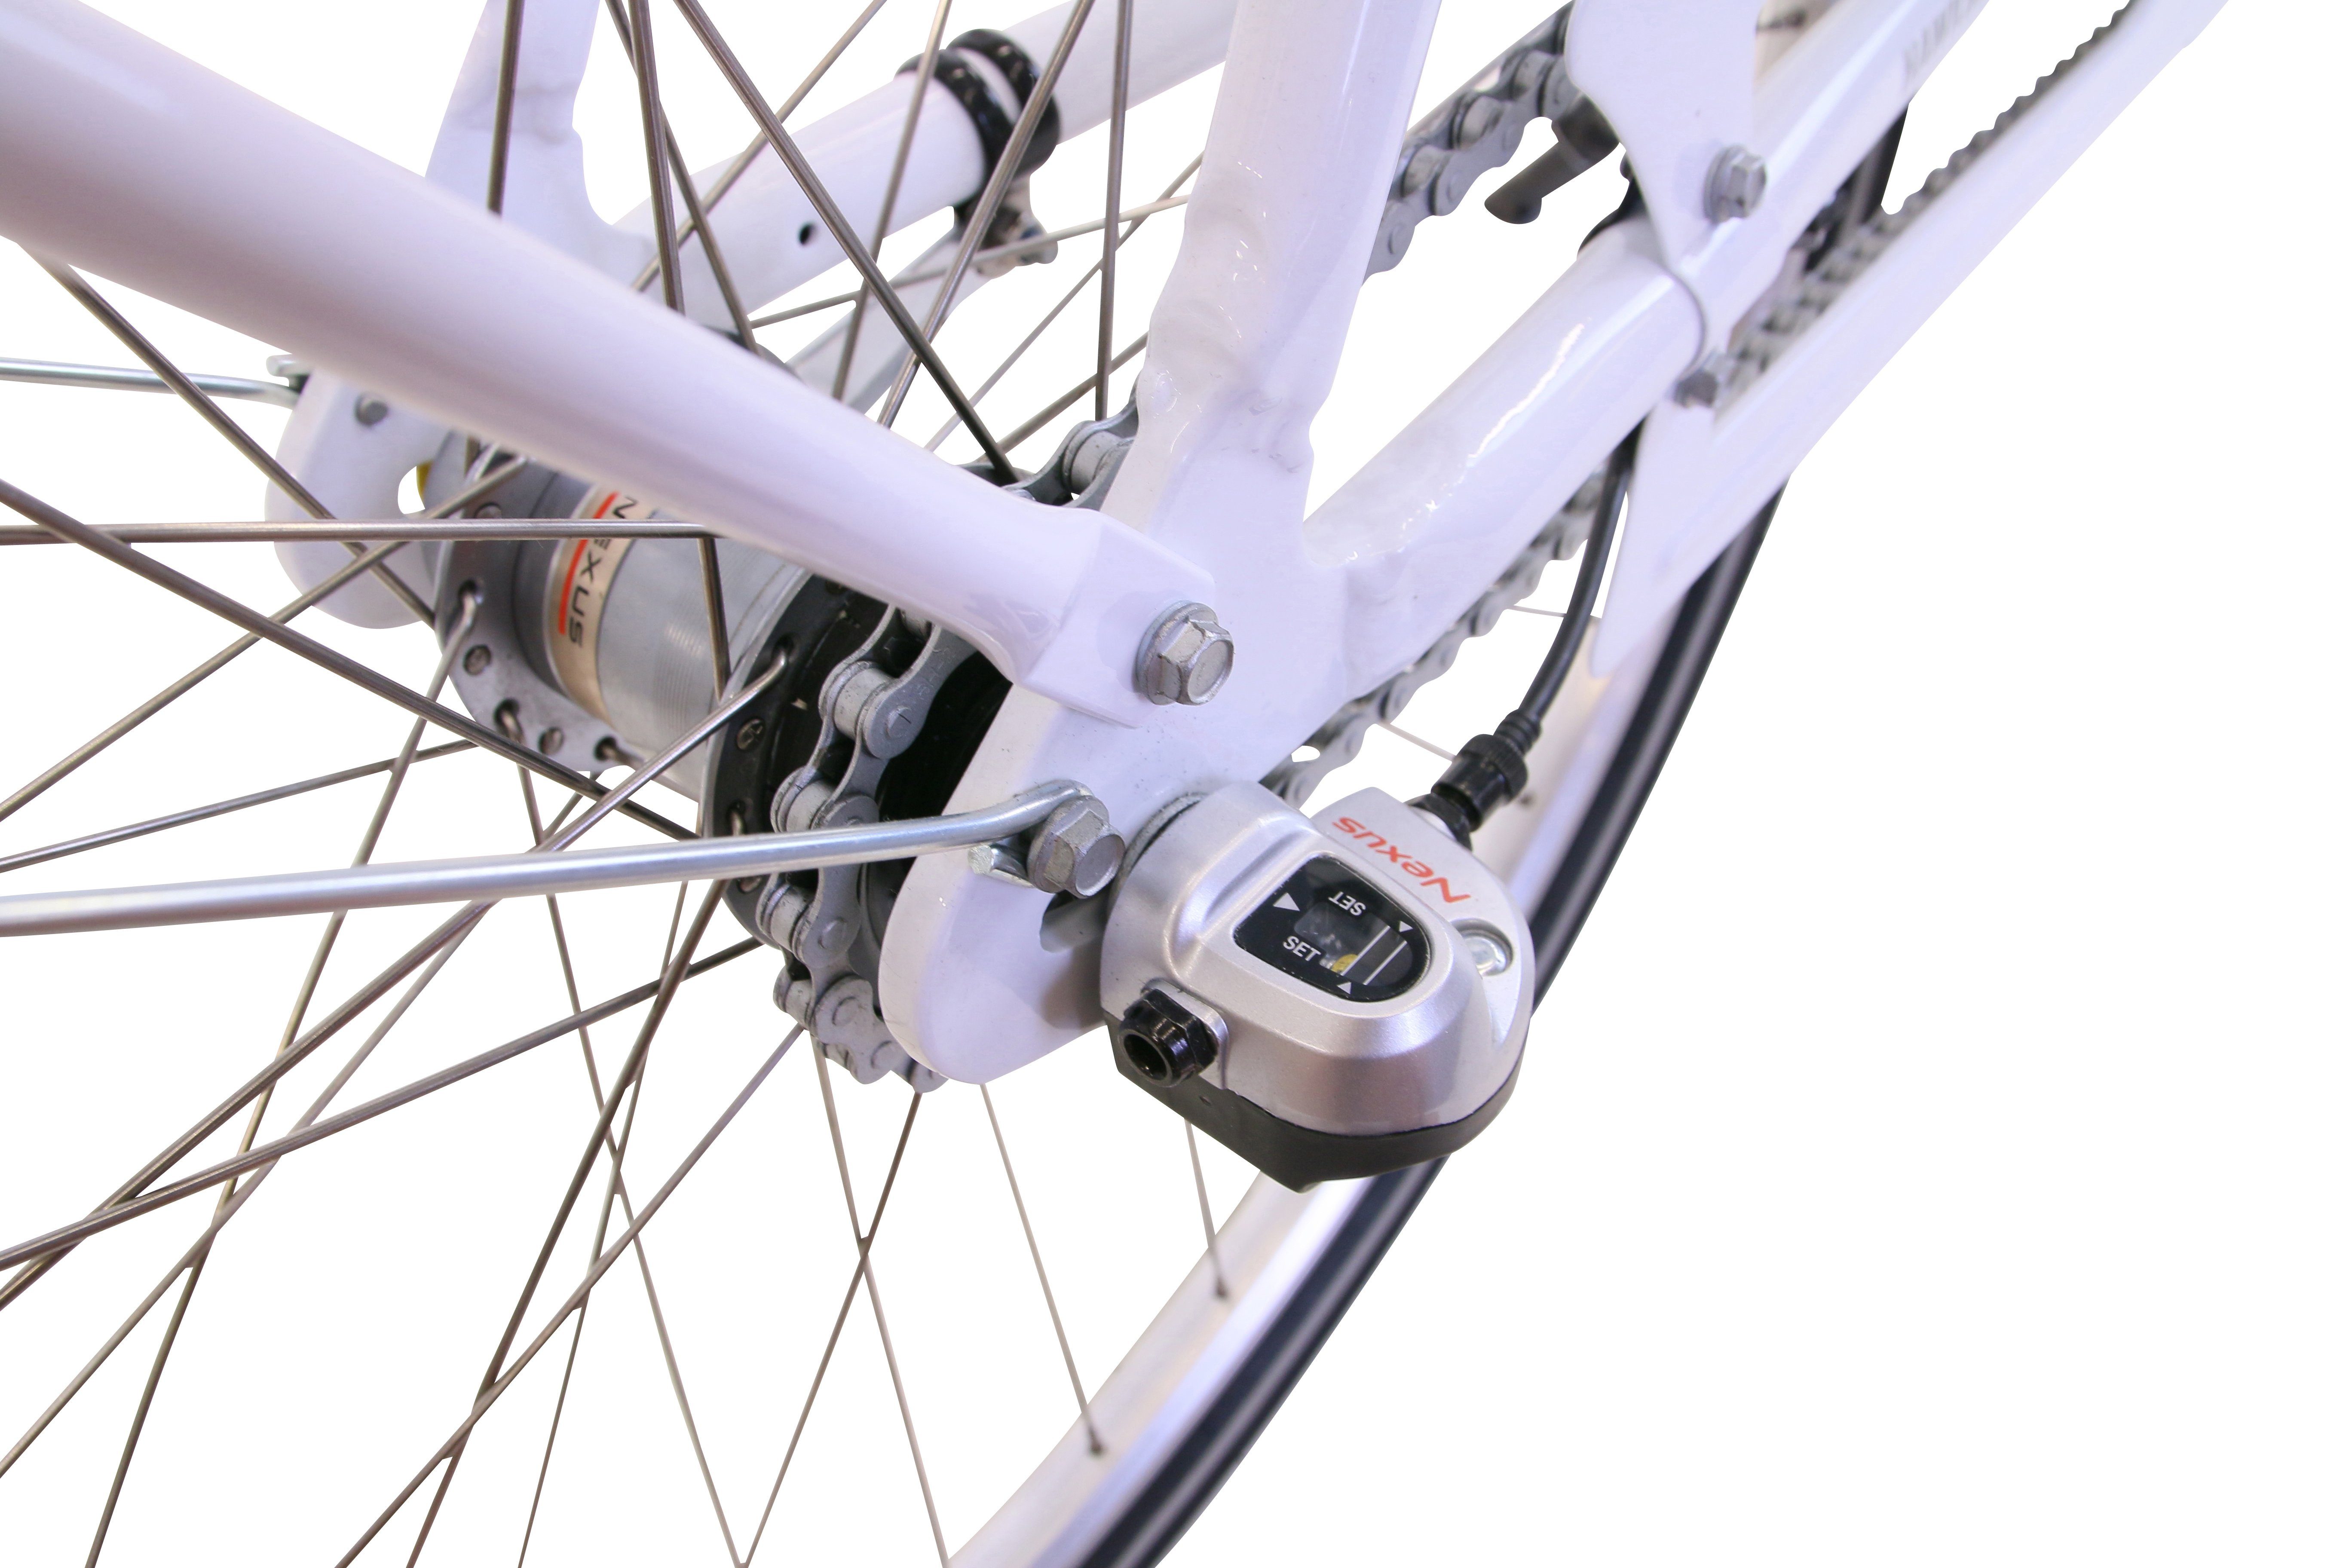 White, HAWK 3 Joy Cityrad City Nexus Shimano Gang Bikes HAWK Classic Schaltwerk